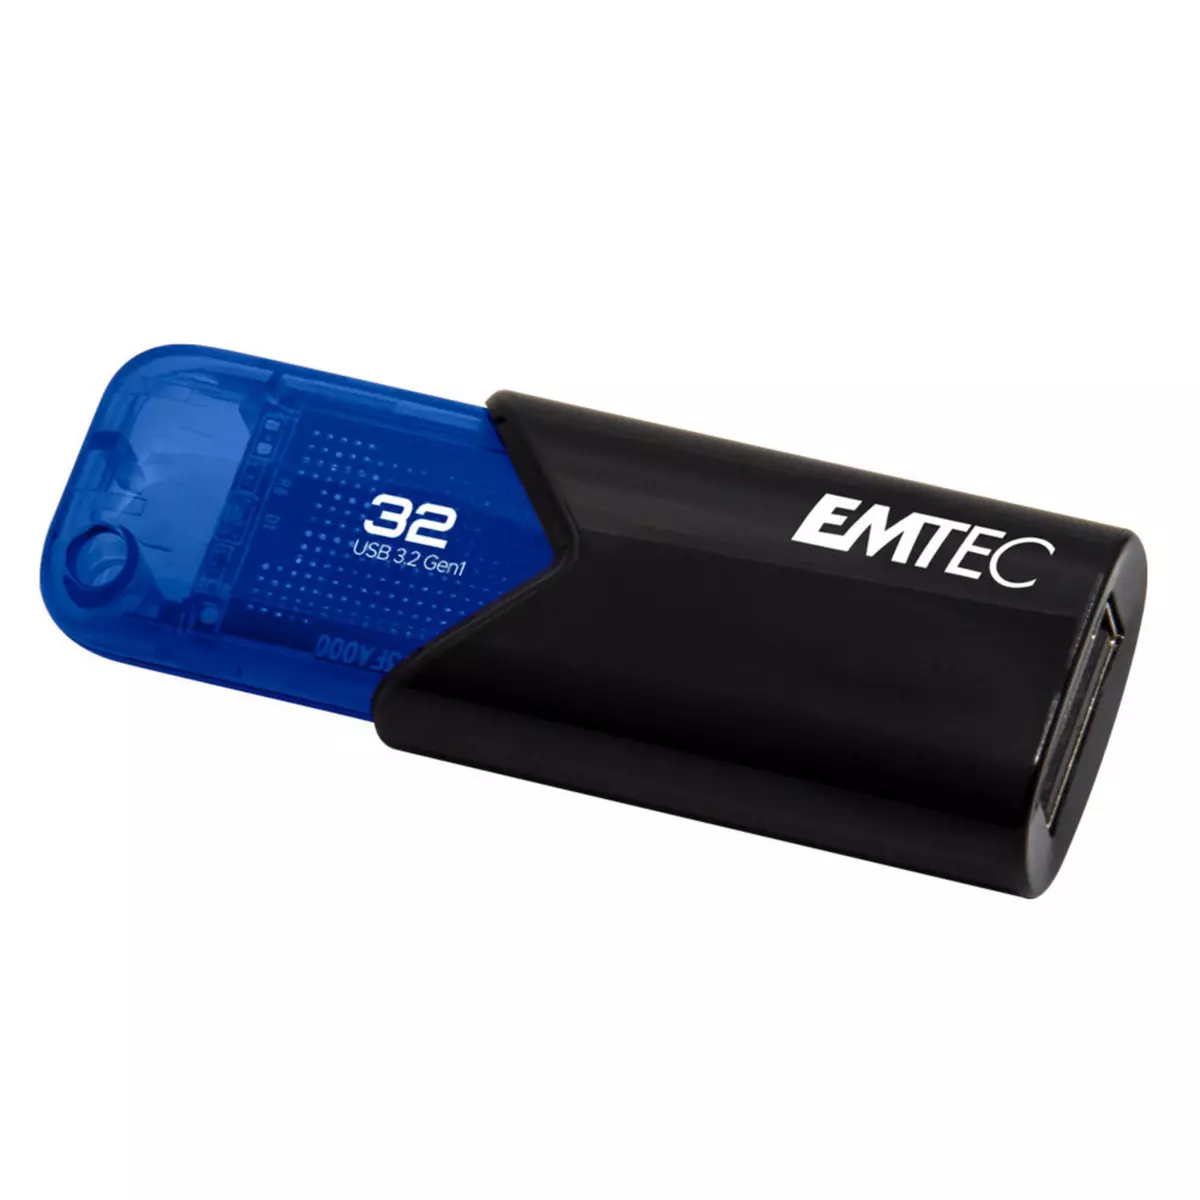 EMTEC Clé USB3.2 32GO EASYB110 - Bleu